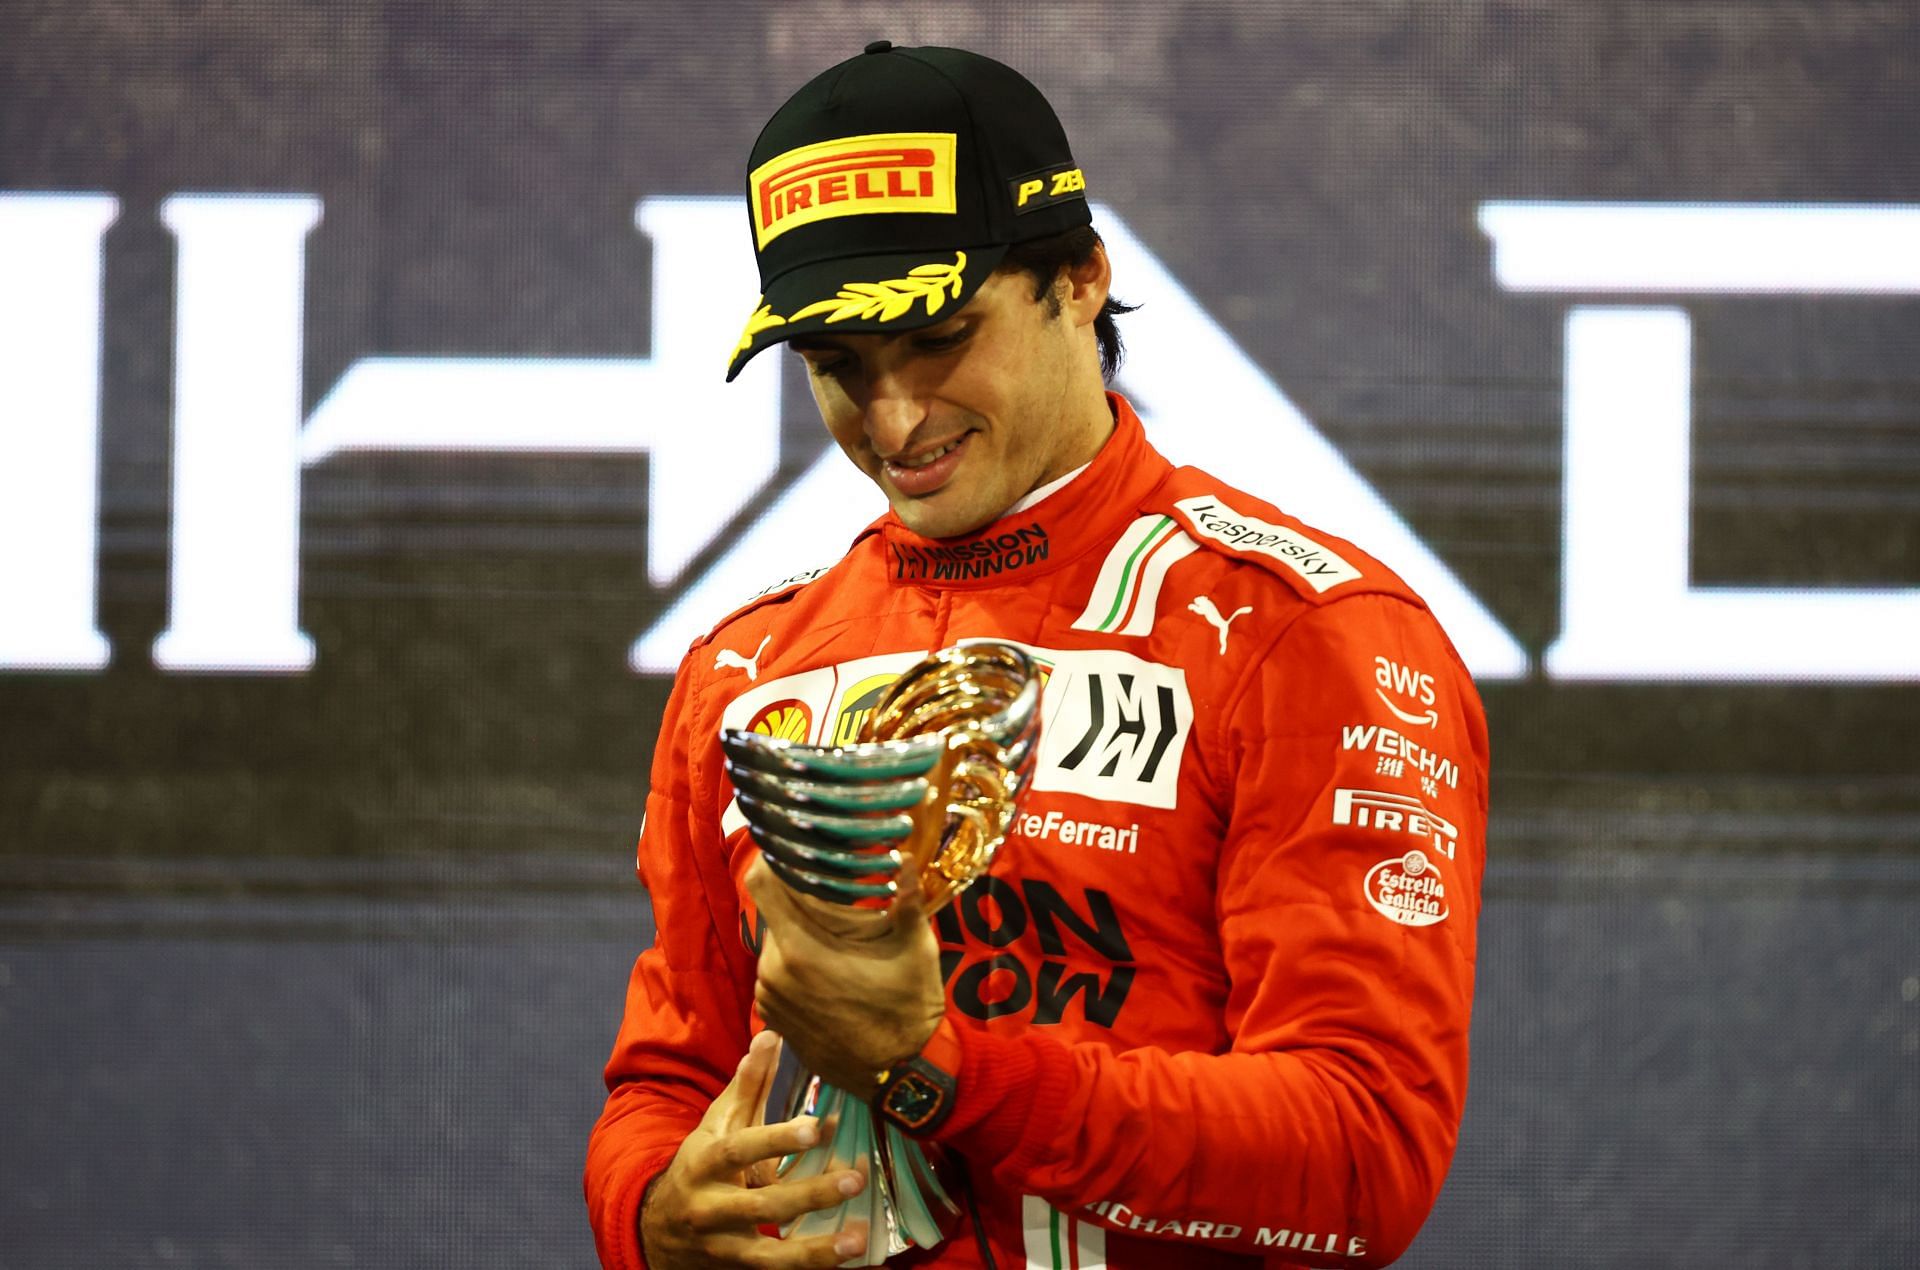 Carlos Sainz after winning P3 at the 2021 Abu Dhabi GP